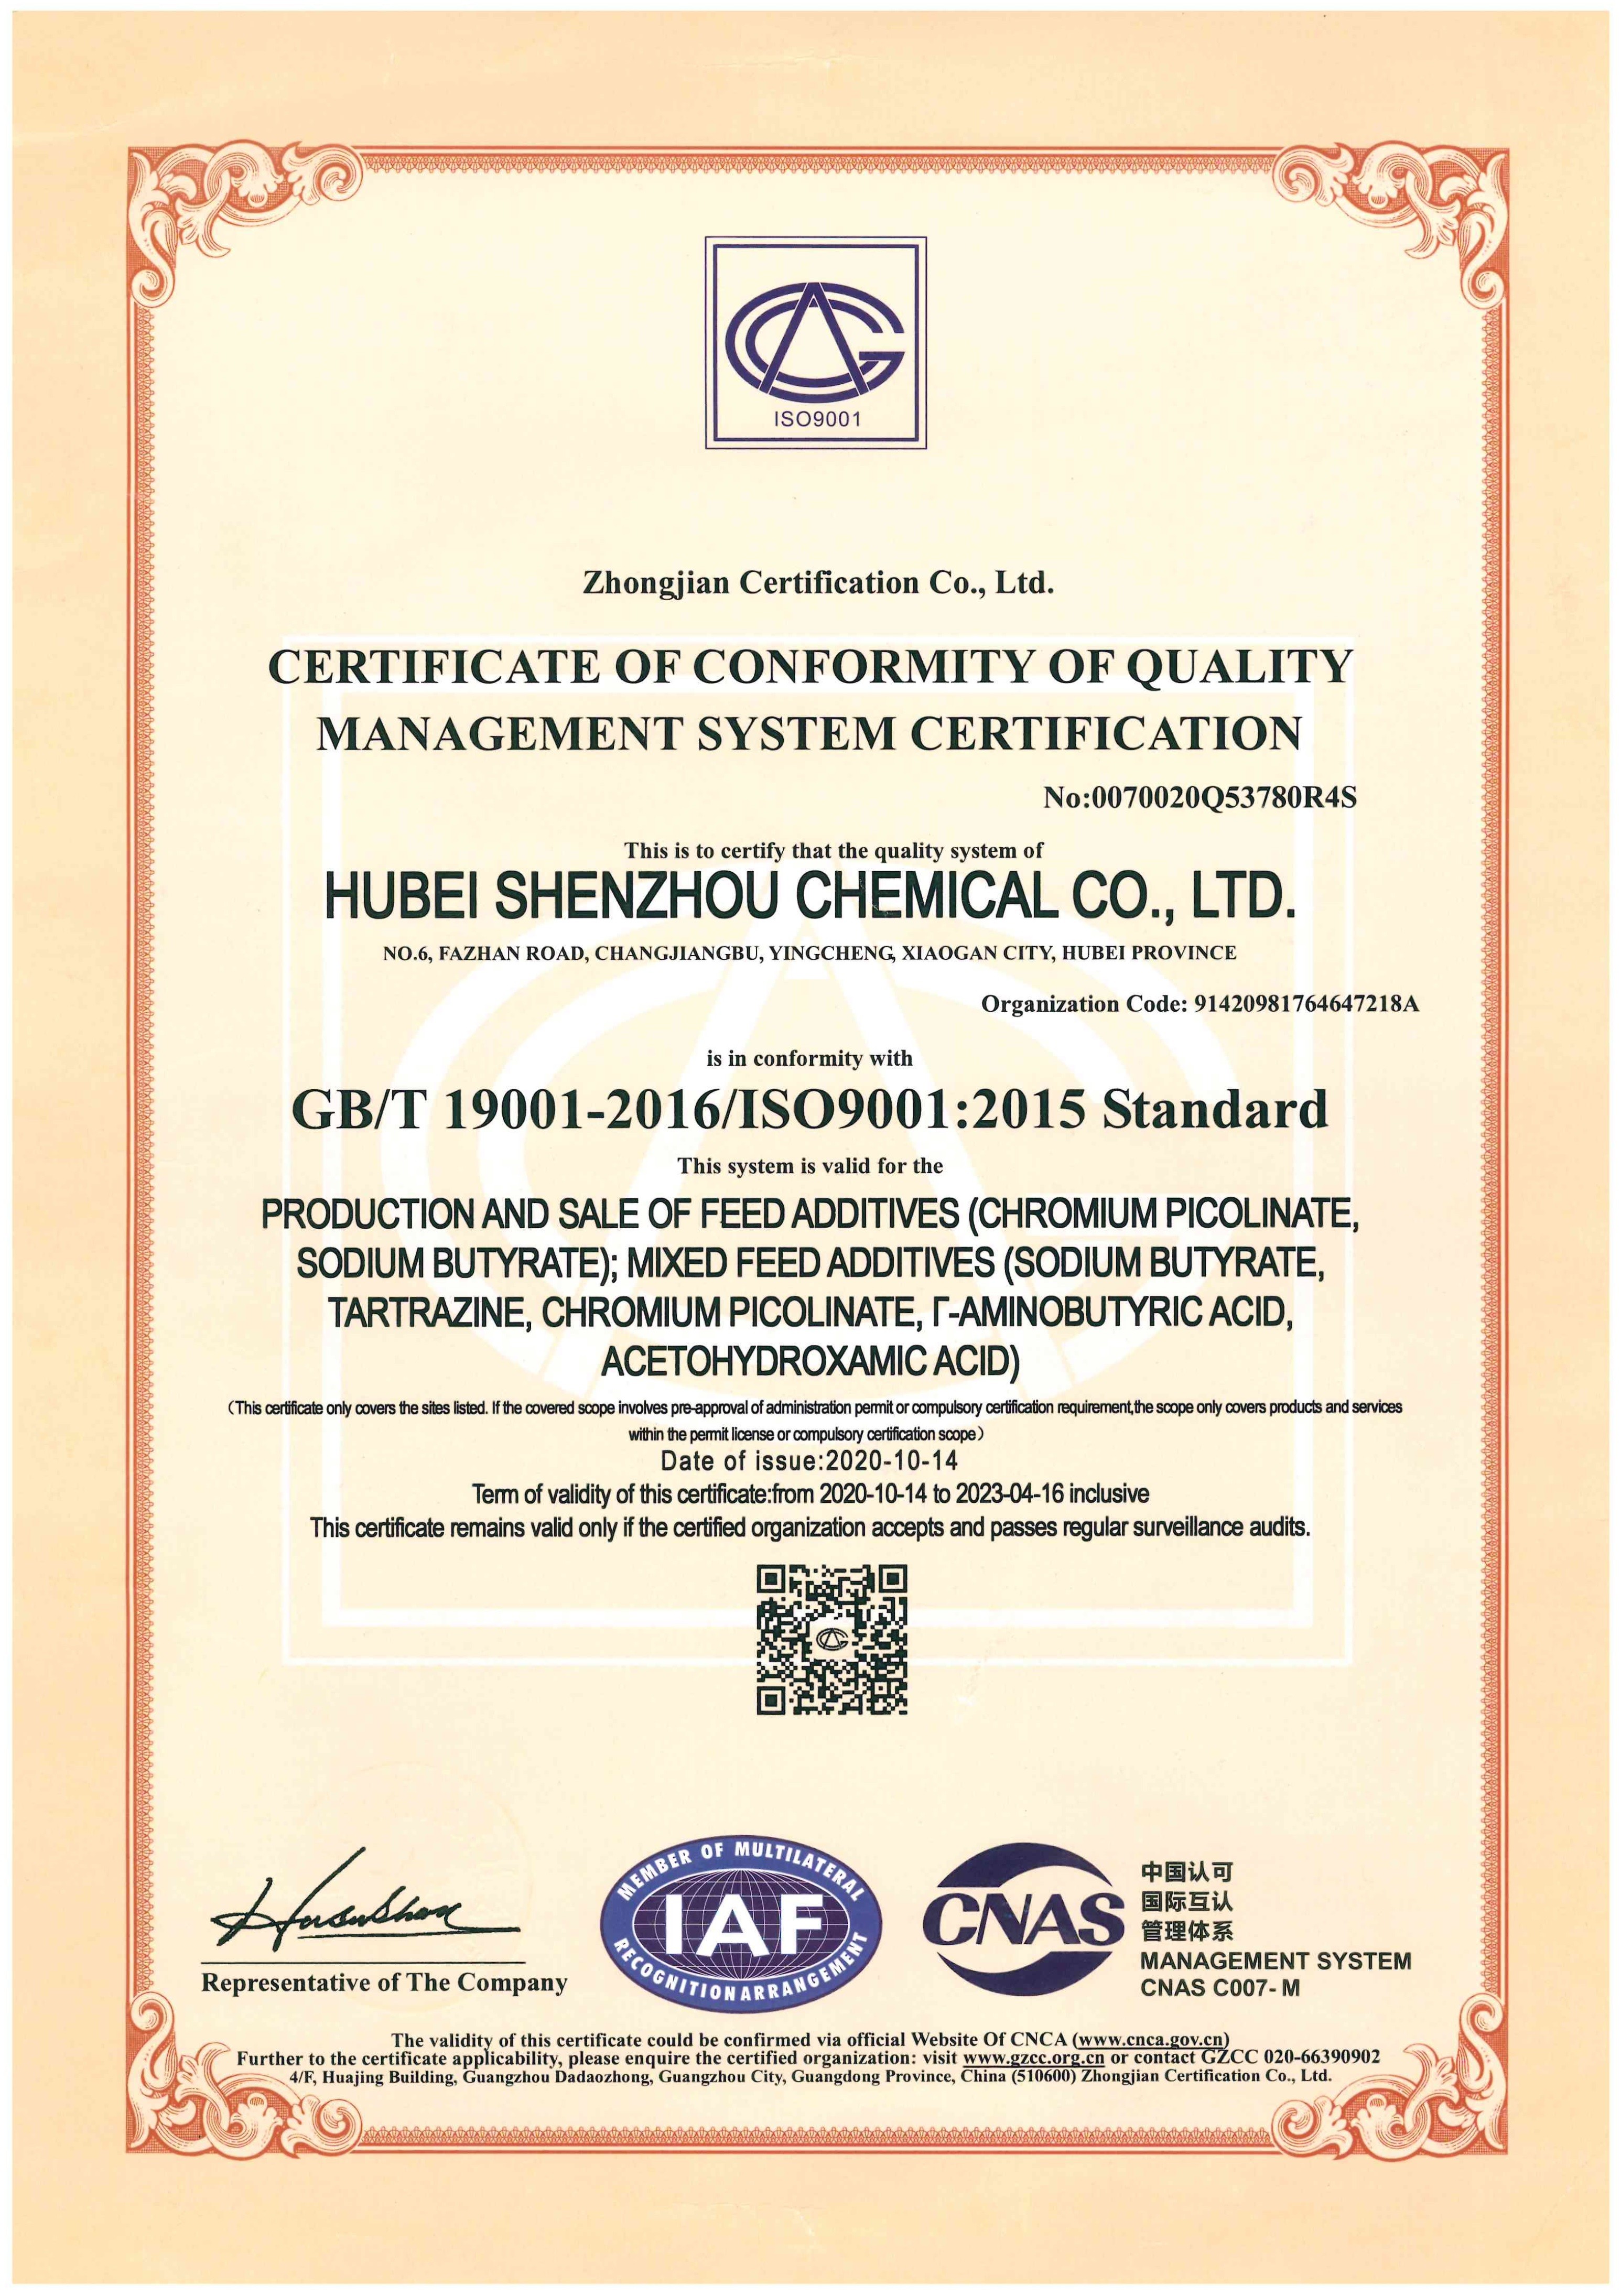 Sunhy Trading (Wuhan) Co., Ltd. Certifications